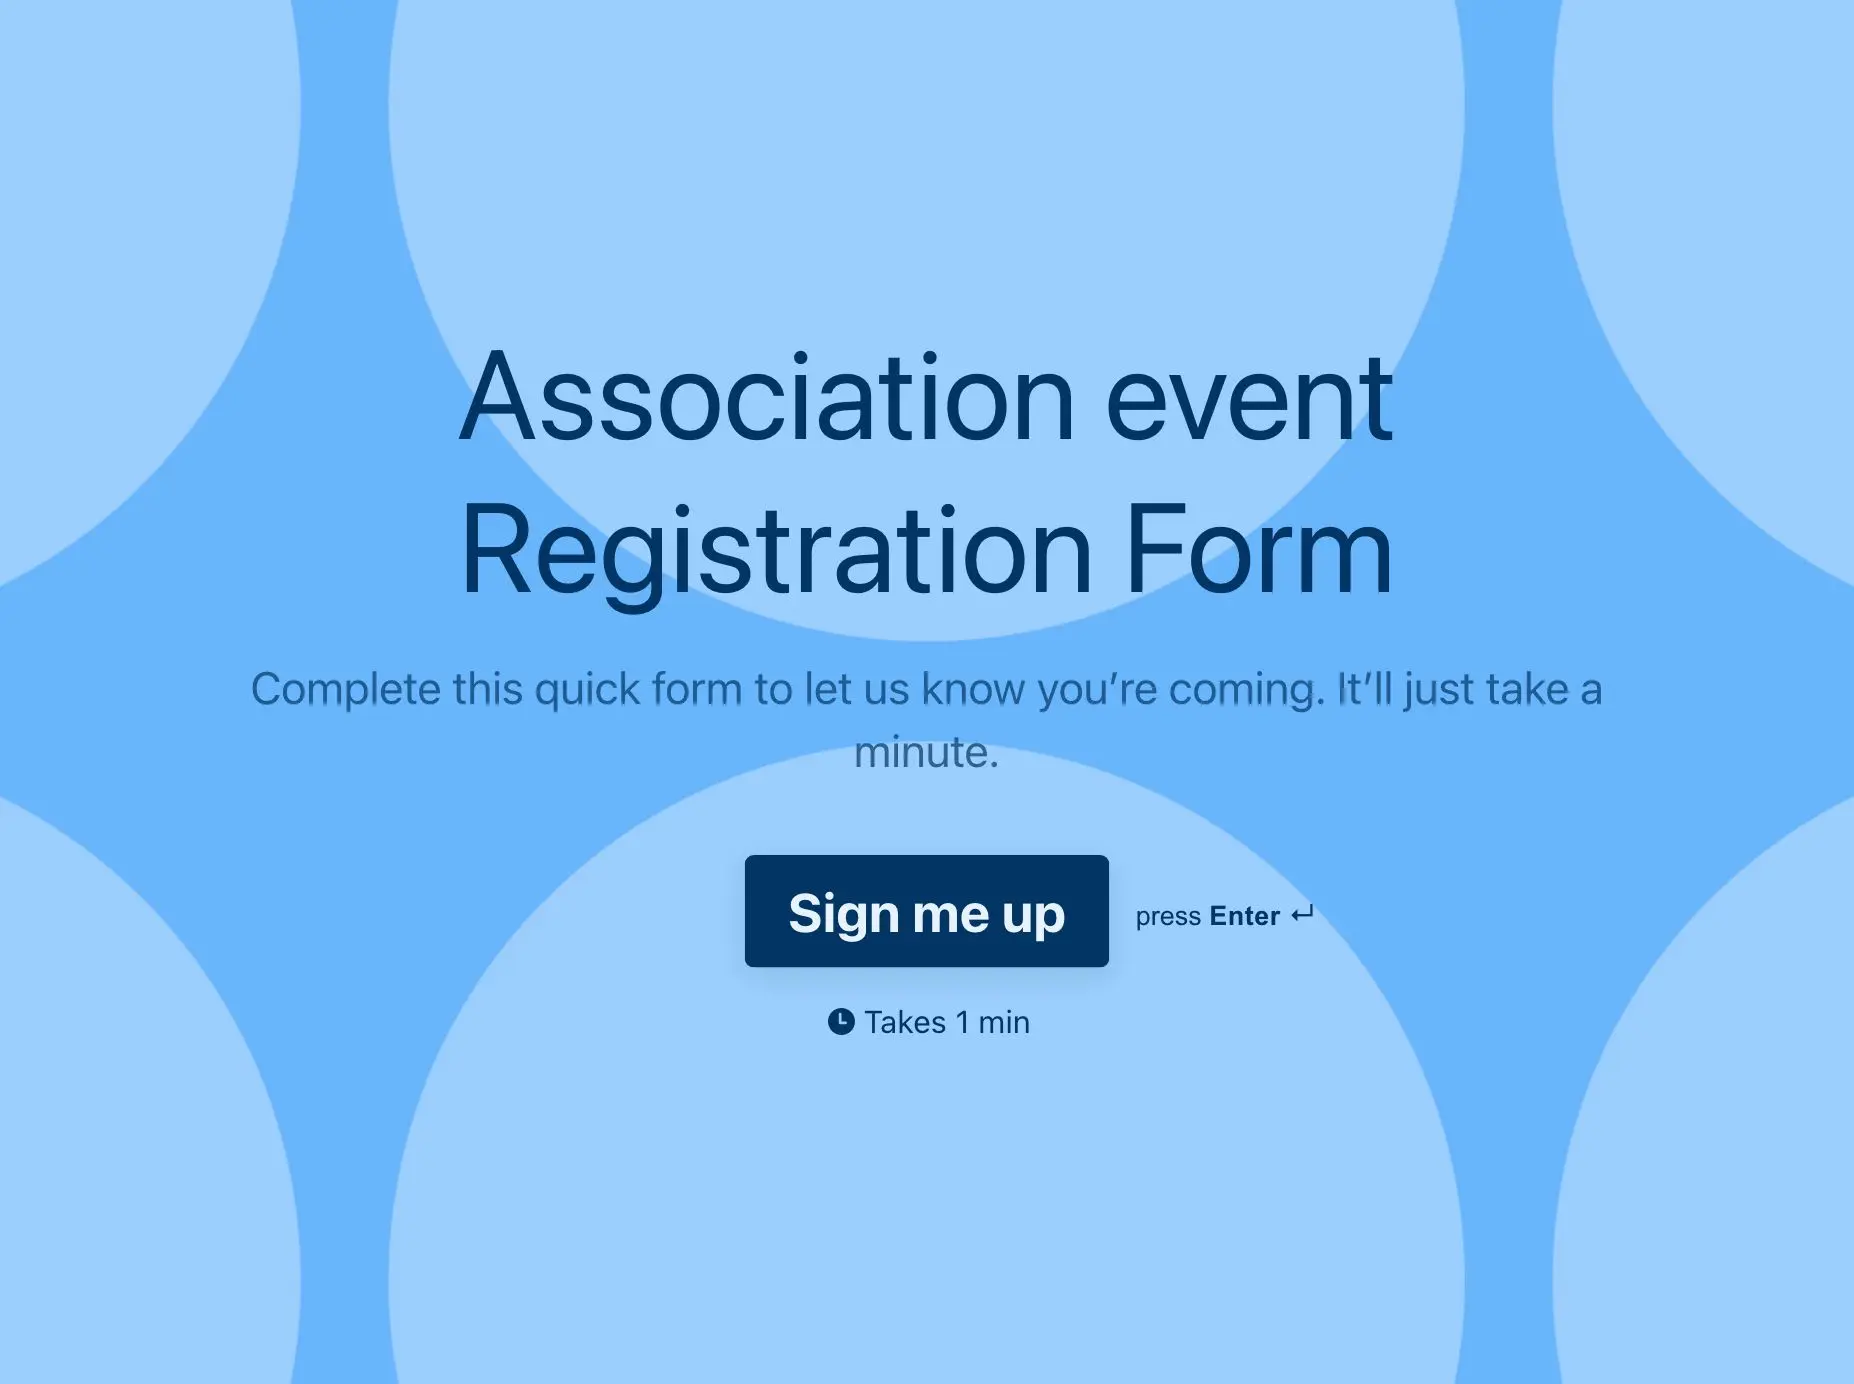 Association event Registration Form Template Hero